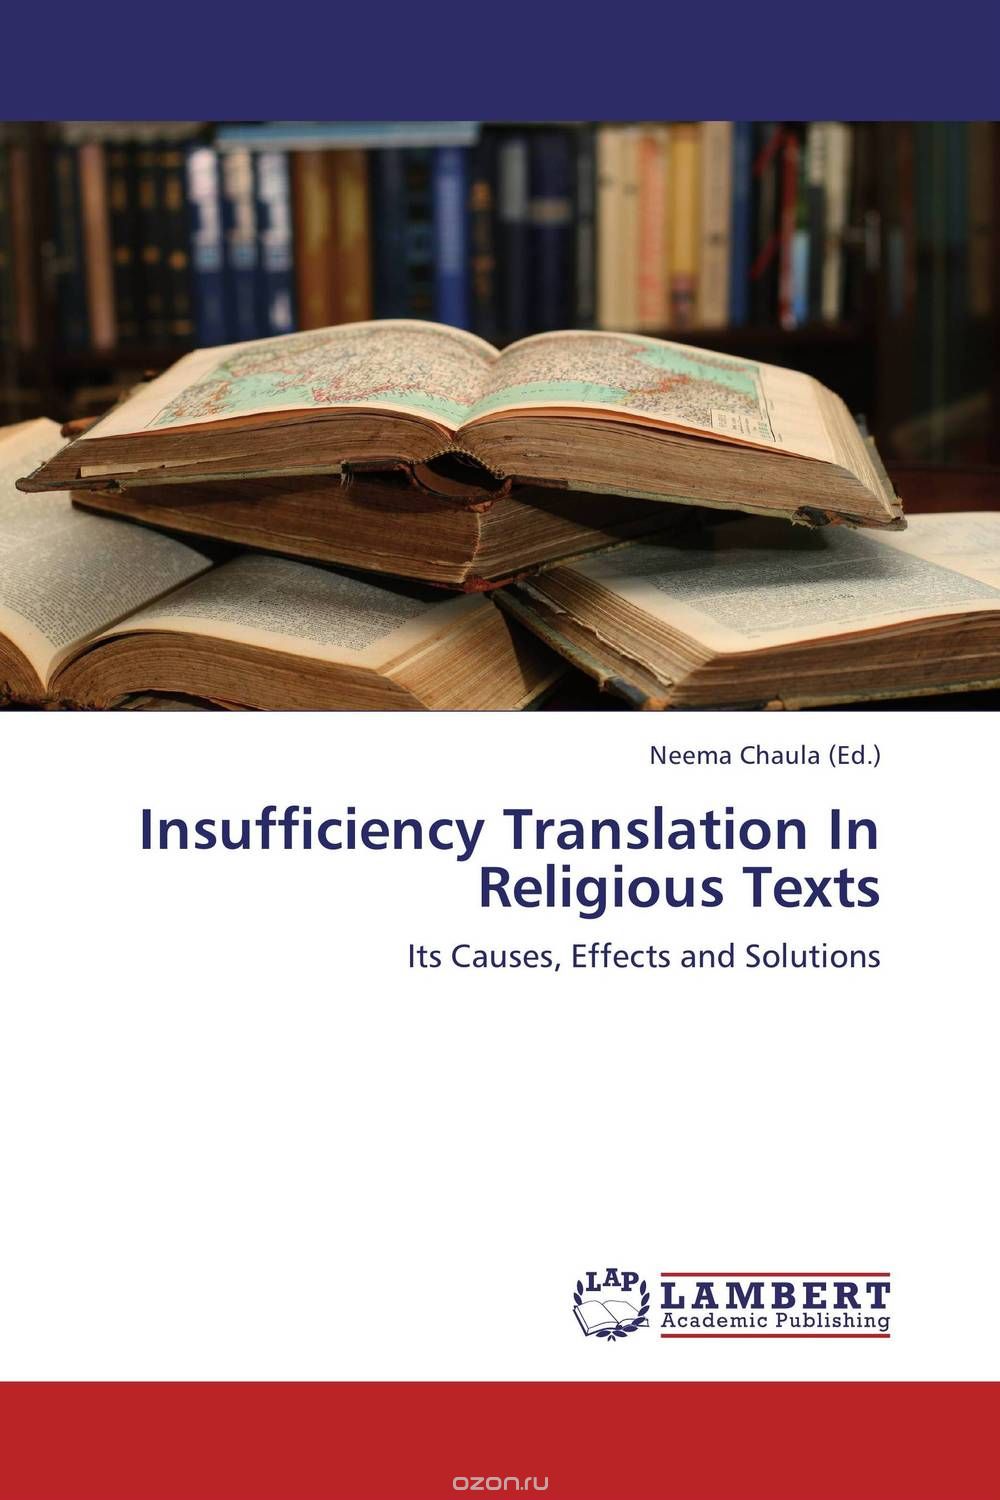 Скачать книгу "Insufficiency Translation In Religious Texts"